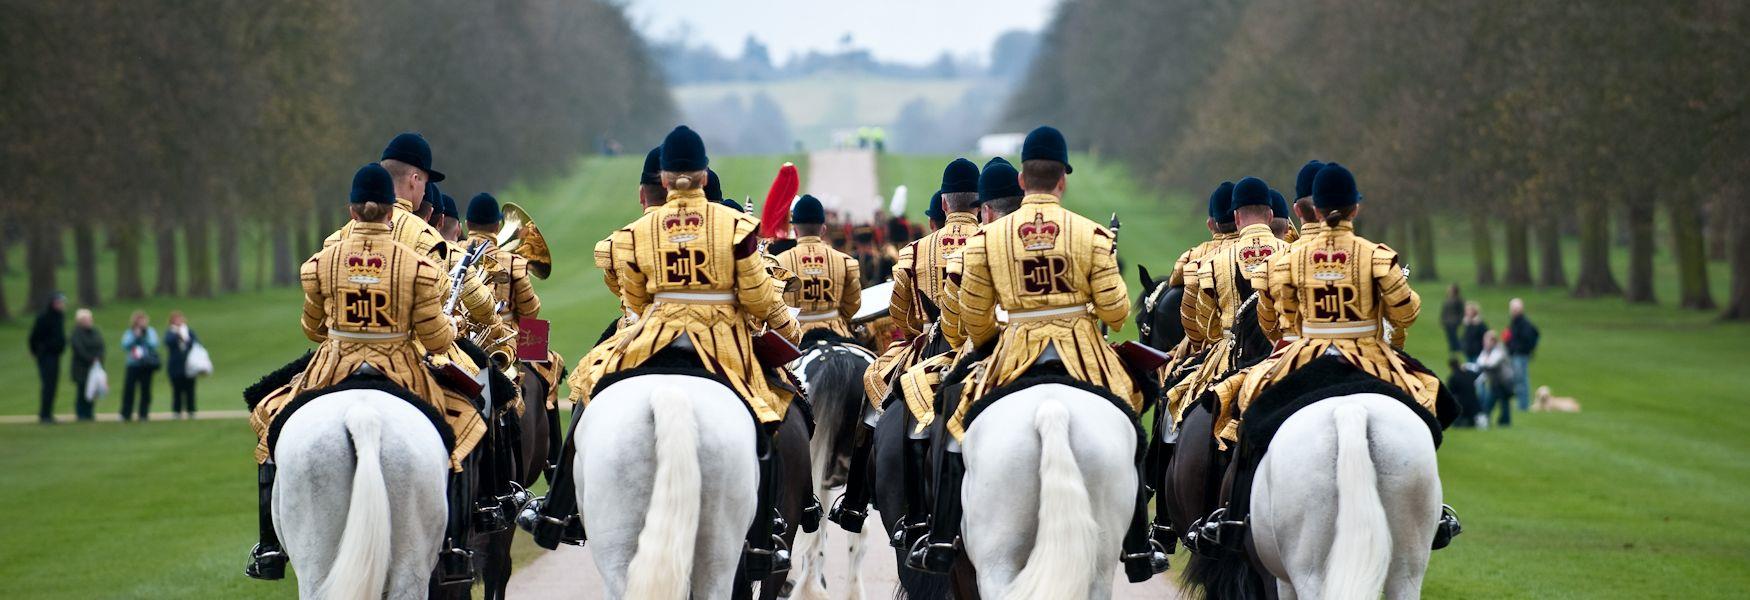 Mounted Band of the Household Cavalry - Doug Harding